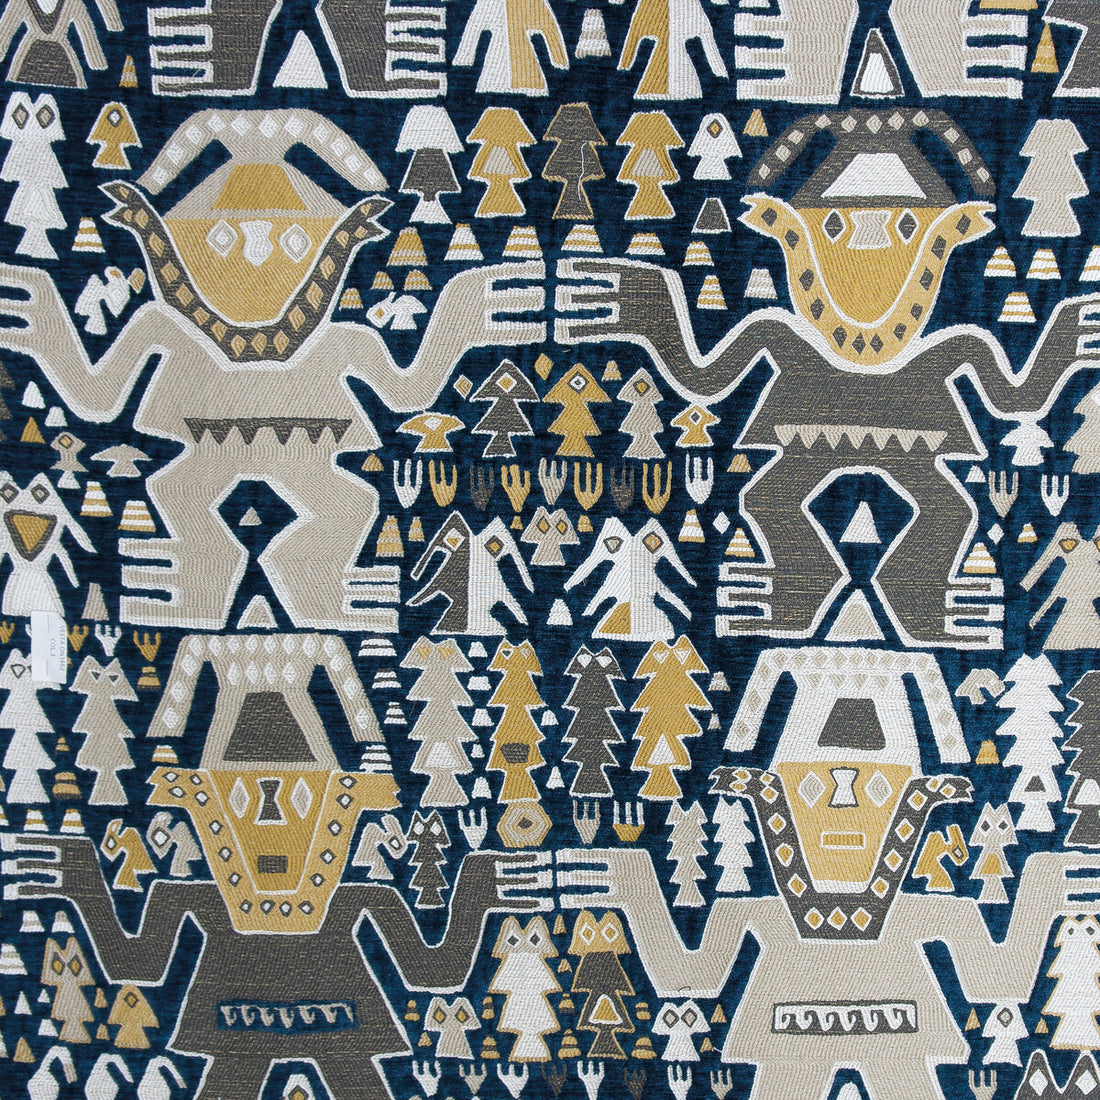 Colosos fabric in azul color - pattern GDT5572.001.0 - by Gaston y Daniela in the Gaston Nuevo Mundo collection